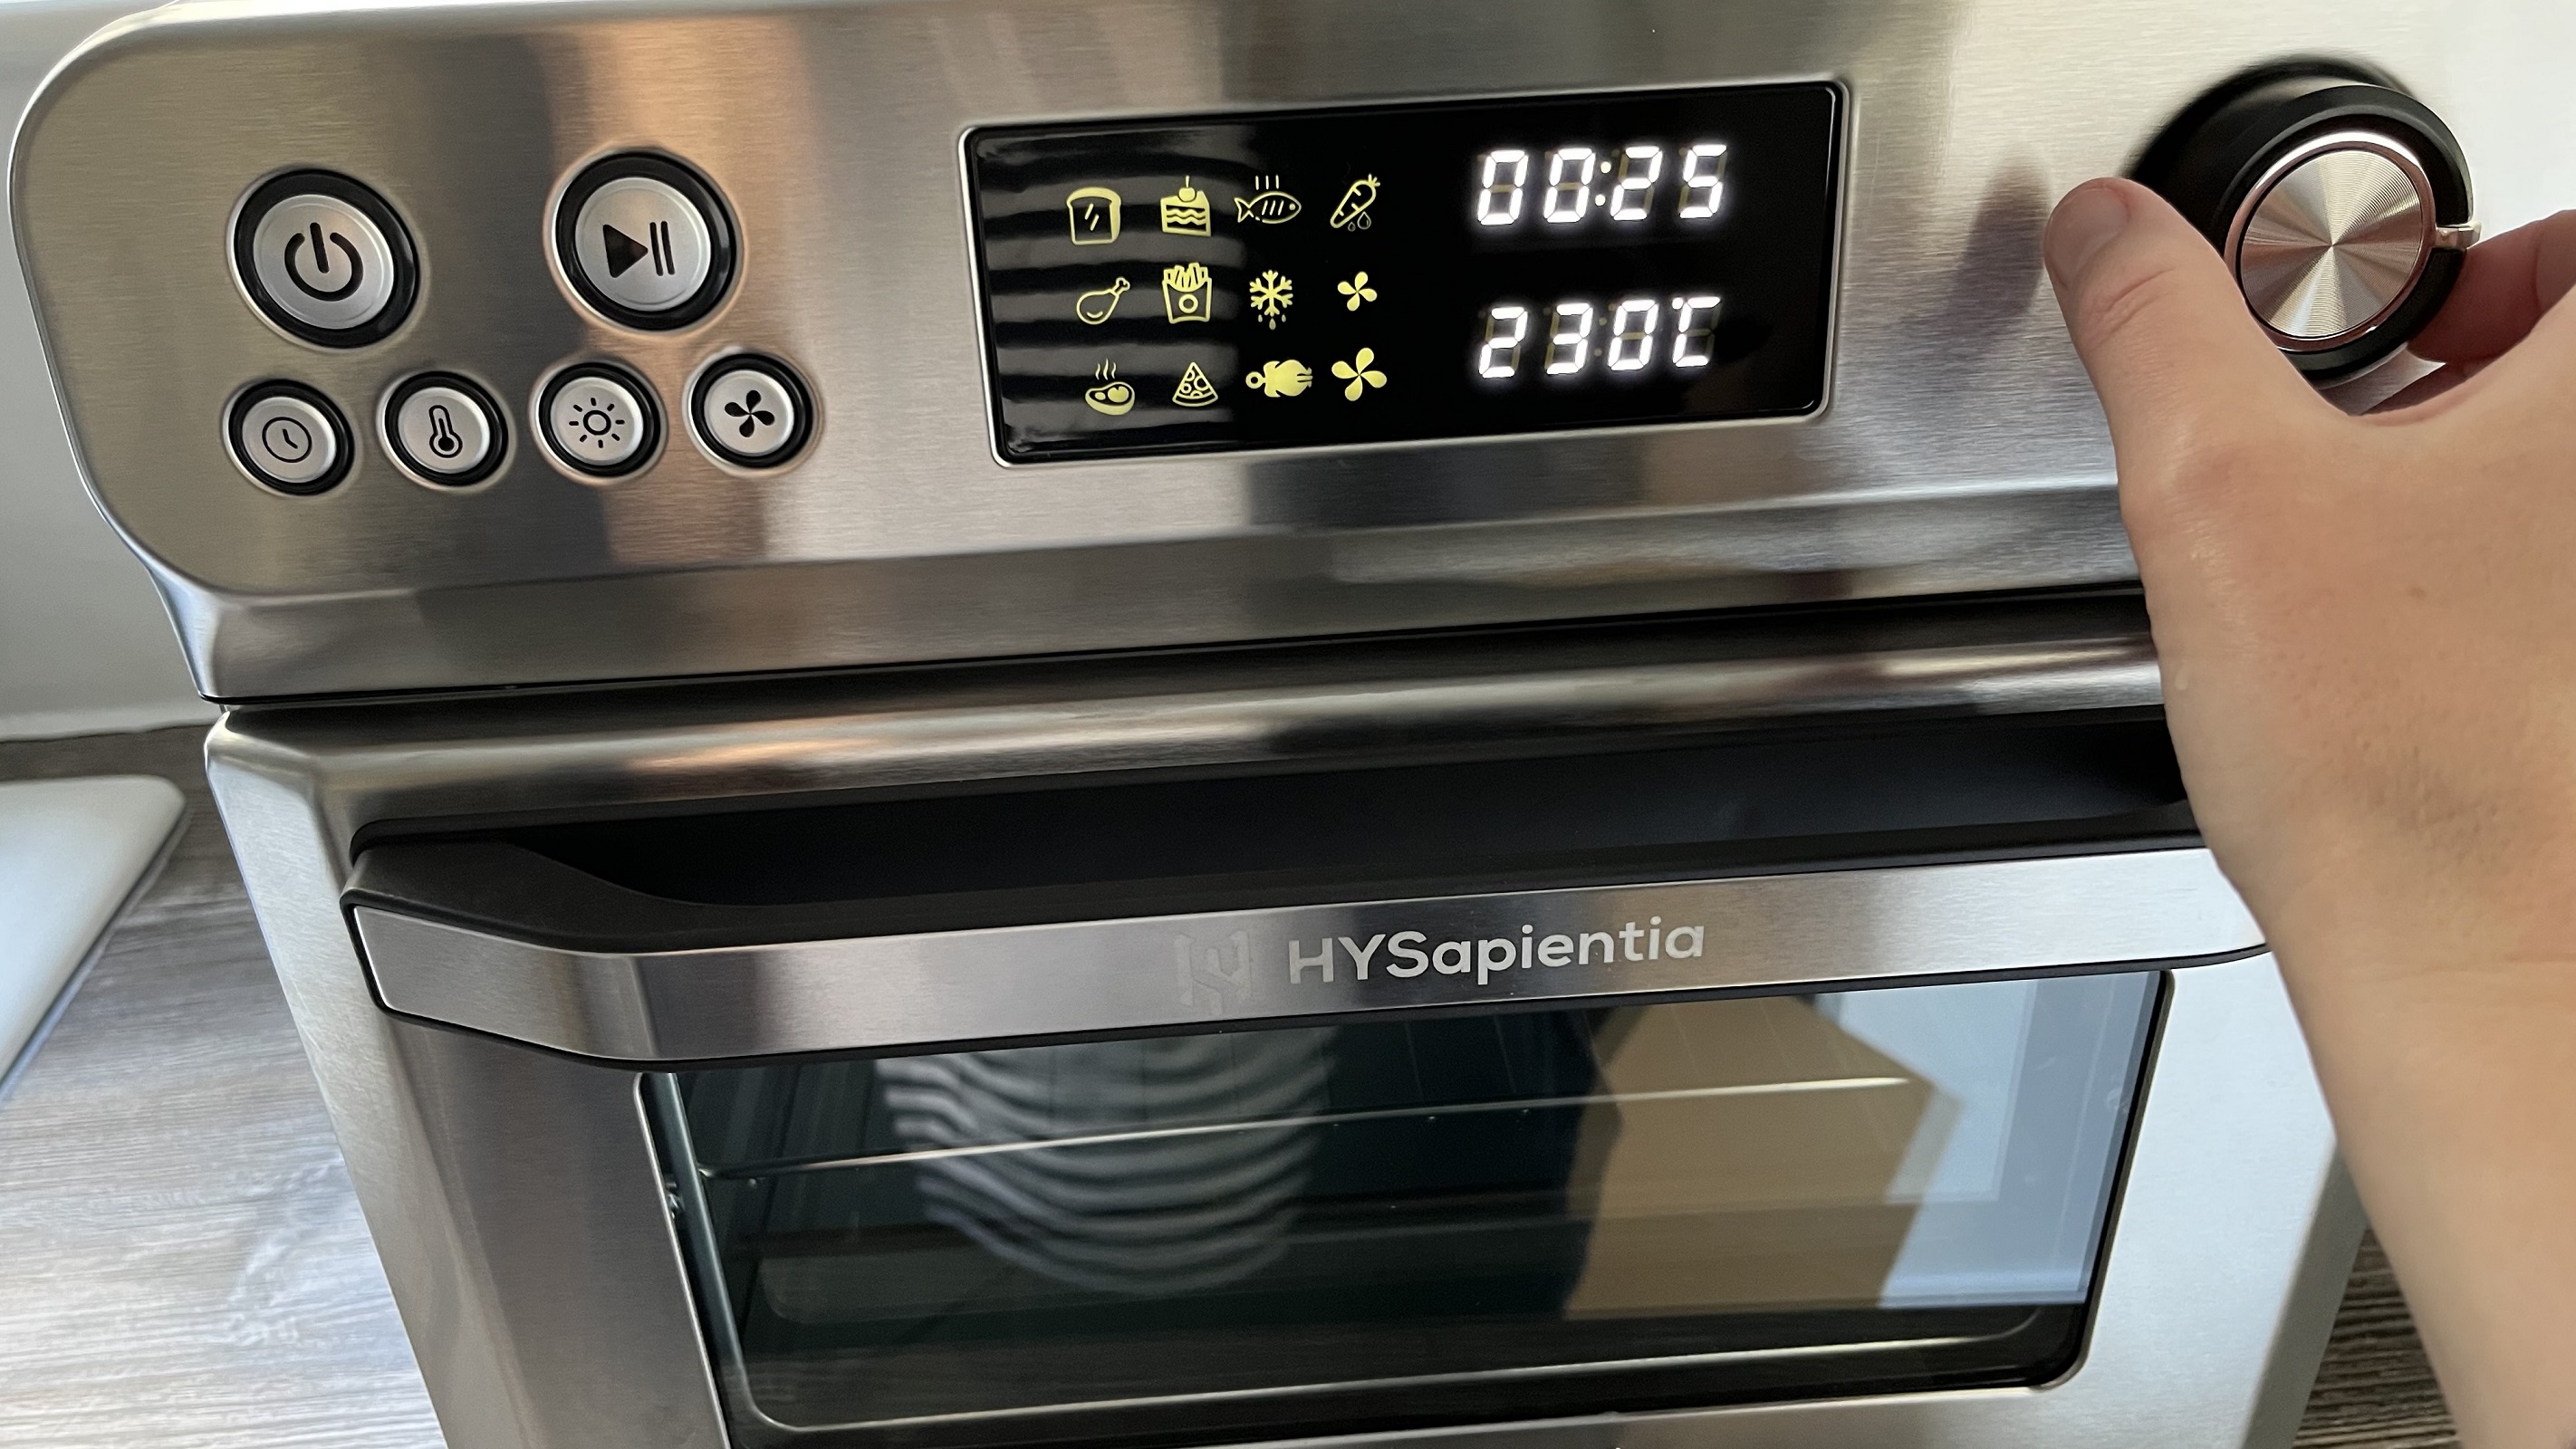 HYSapientia air fryer oven display screen